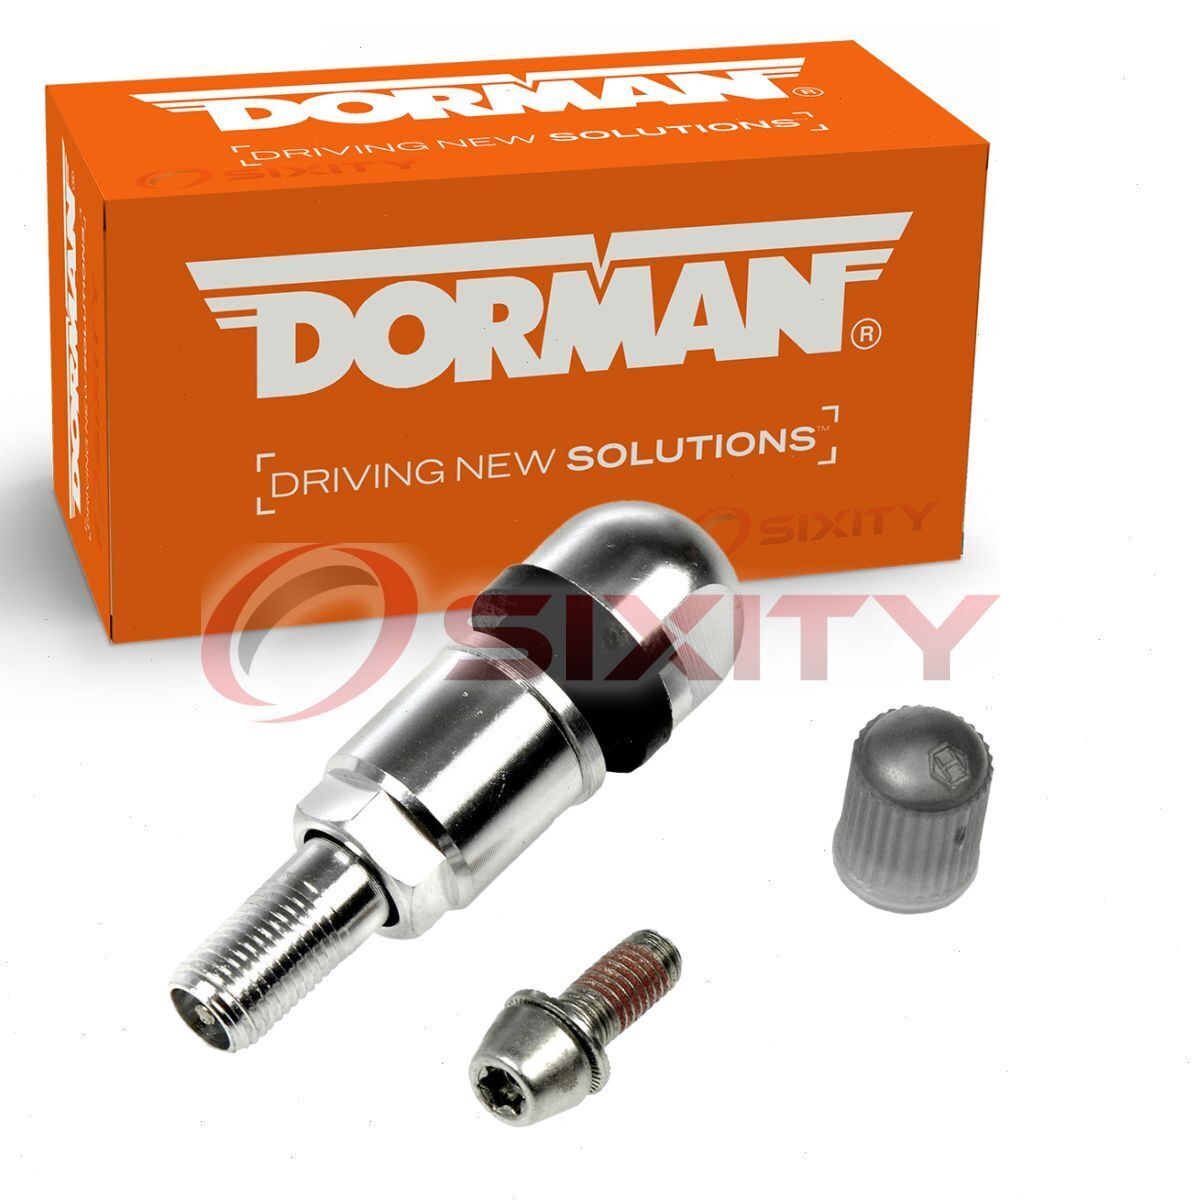 Dorman TPMS Valve Kit for 2007-2008 BMW 335xi Tire Pressure Monitoring ep